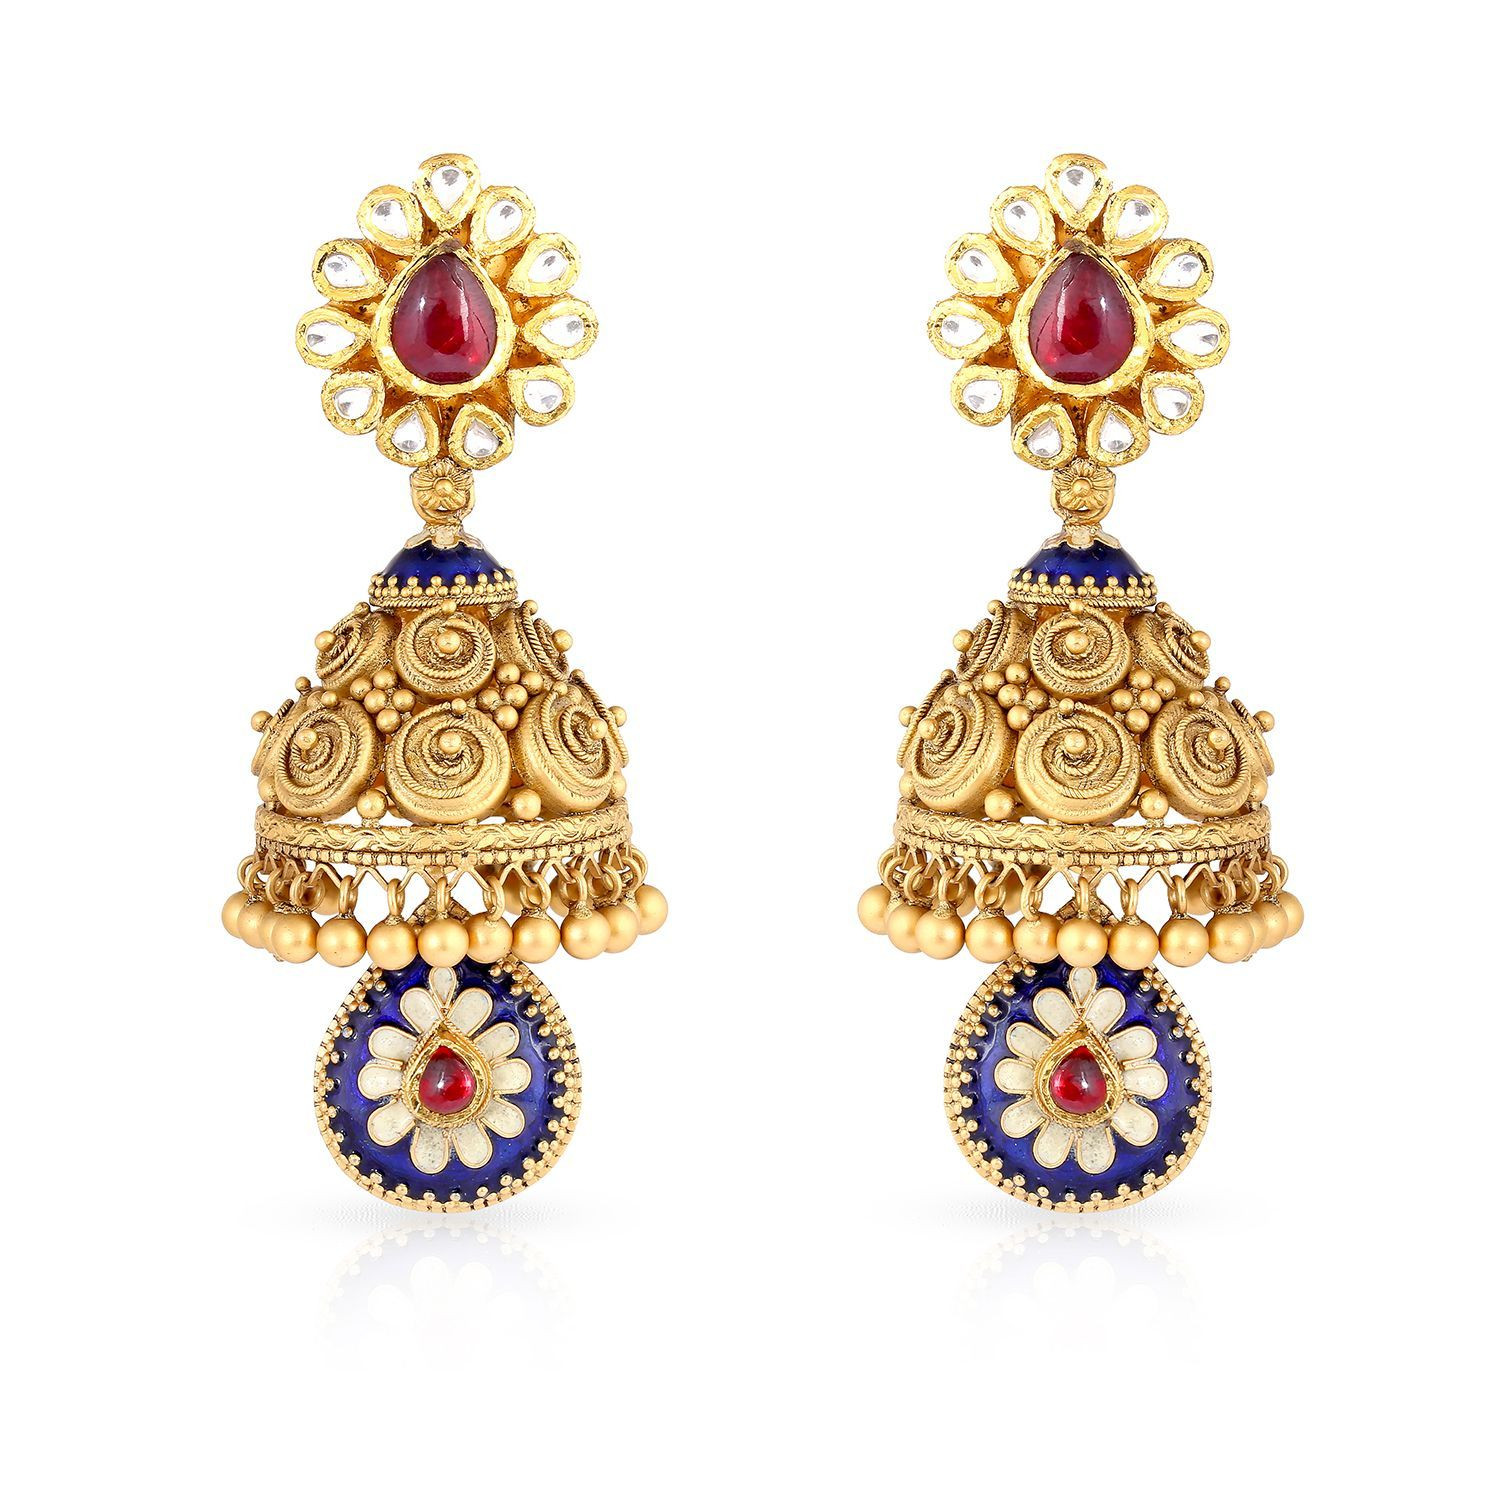 Arab Metal Coin Earrings Gold | Gold Color Arab Coin Jewelry | Muslim Gold  Earrings - Dangle Earrings - Aliexpress